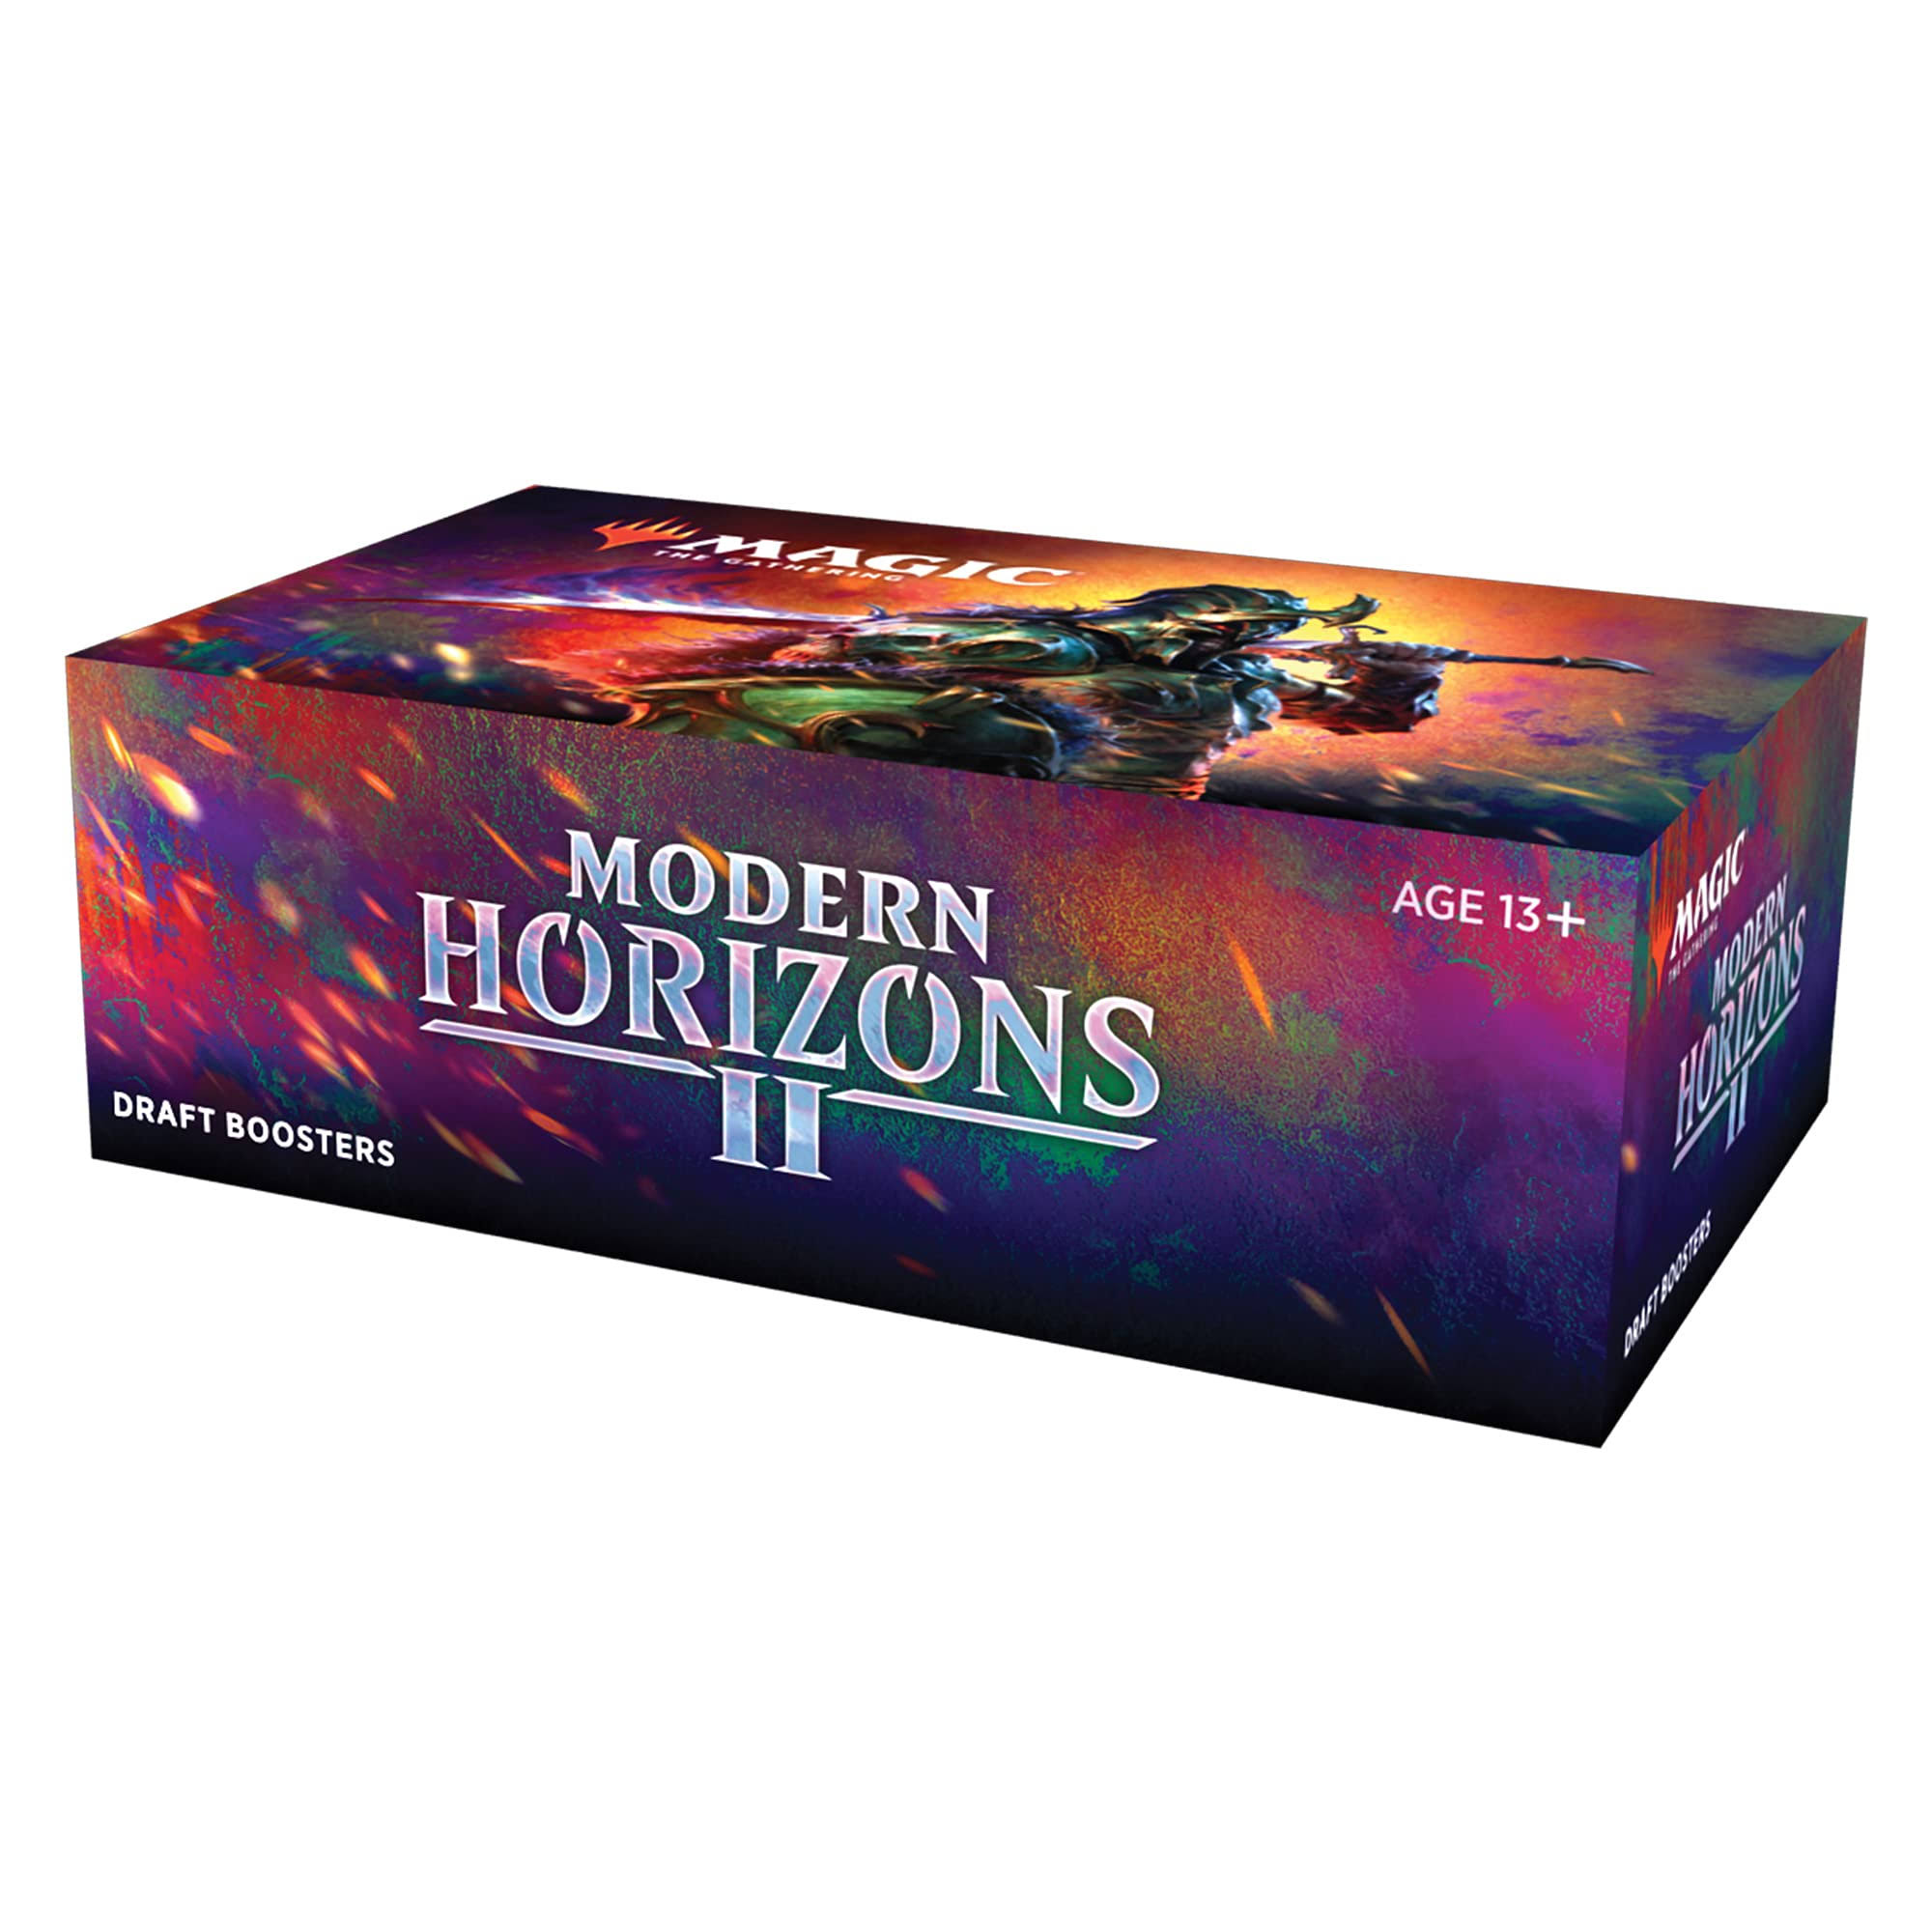 Magic The Gathering Modern Horizons 2 Draft Booster Box